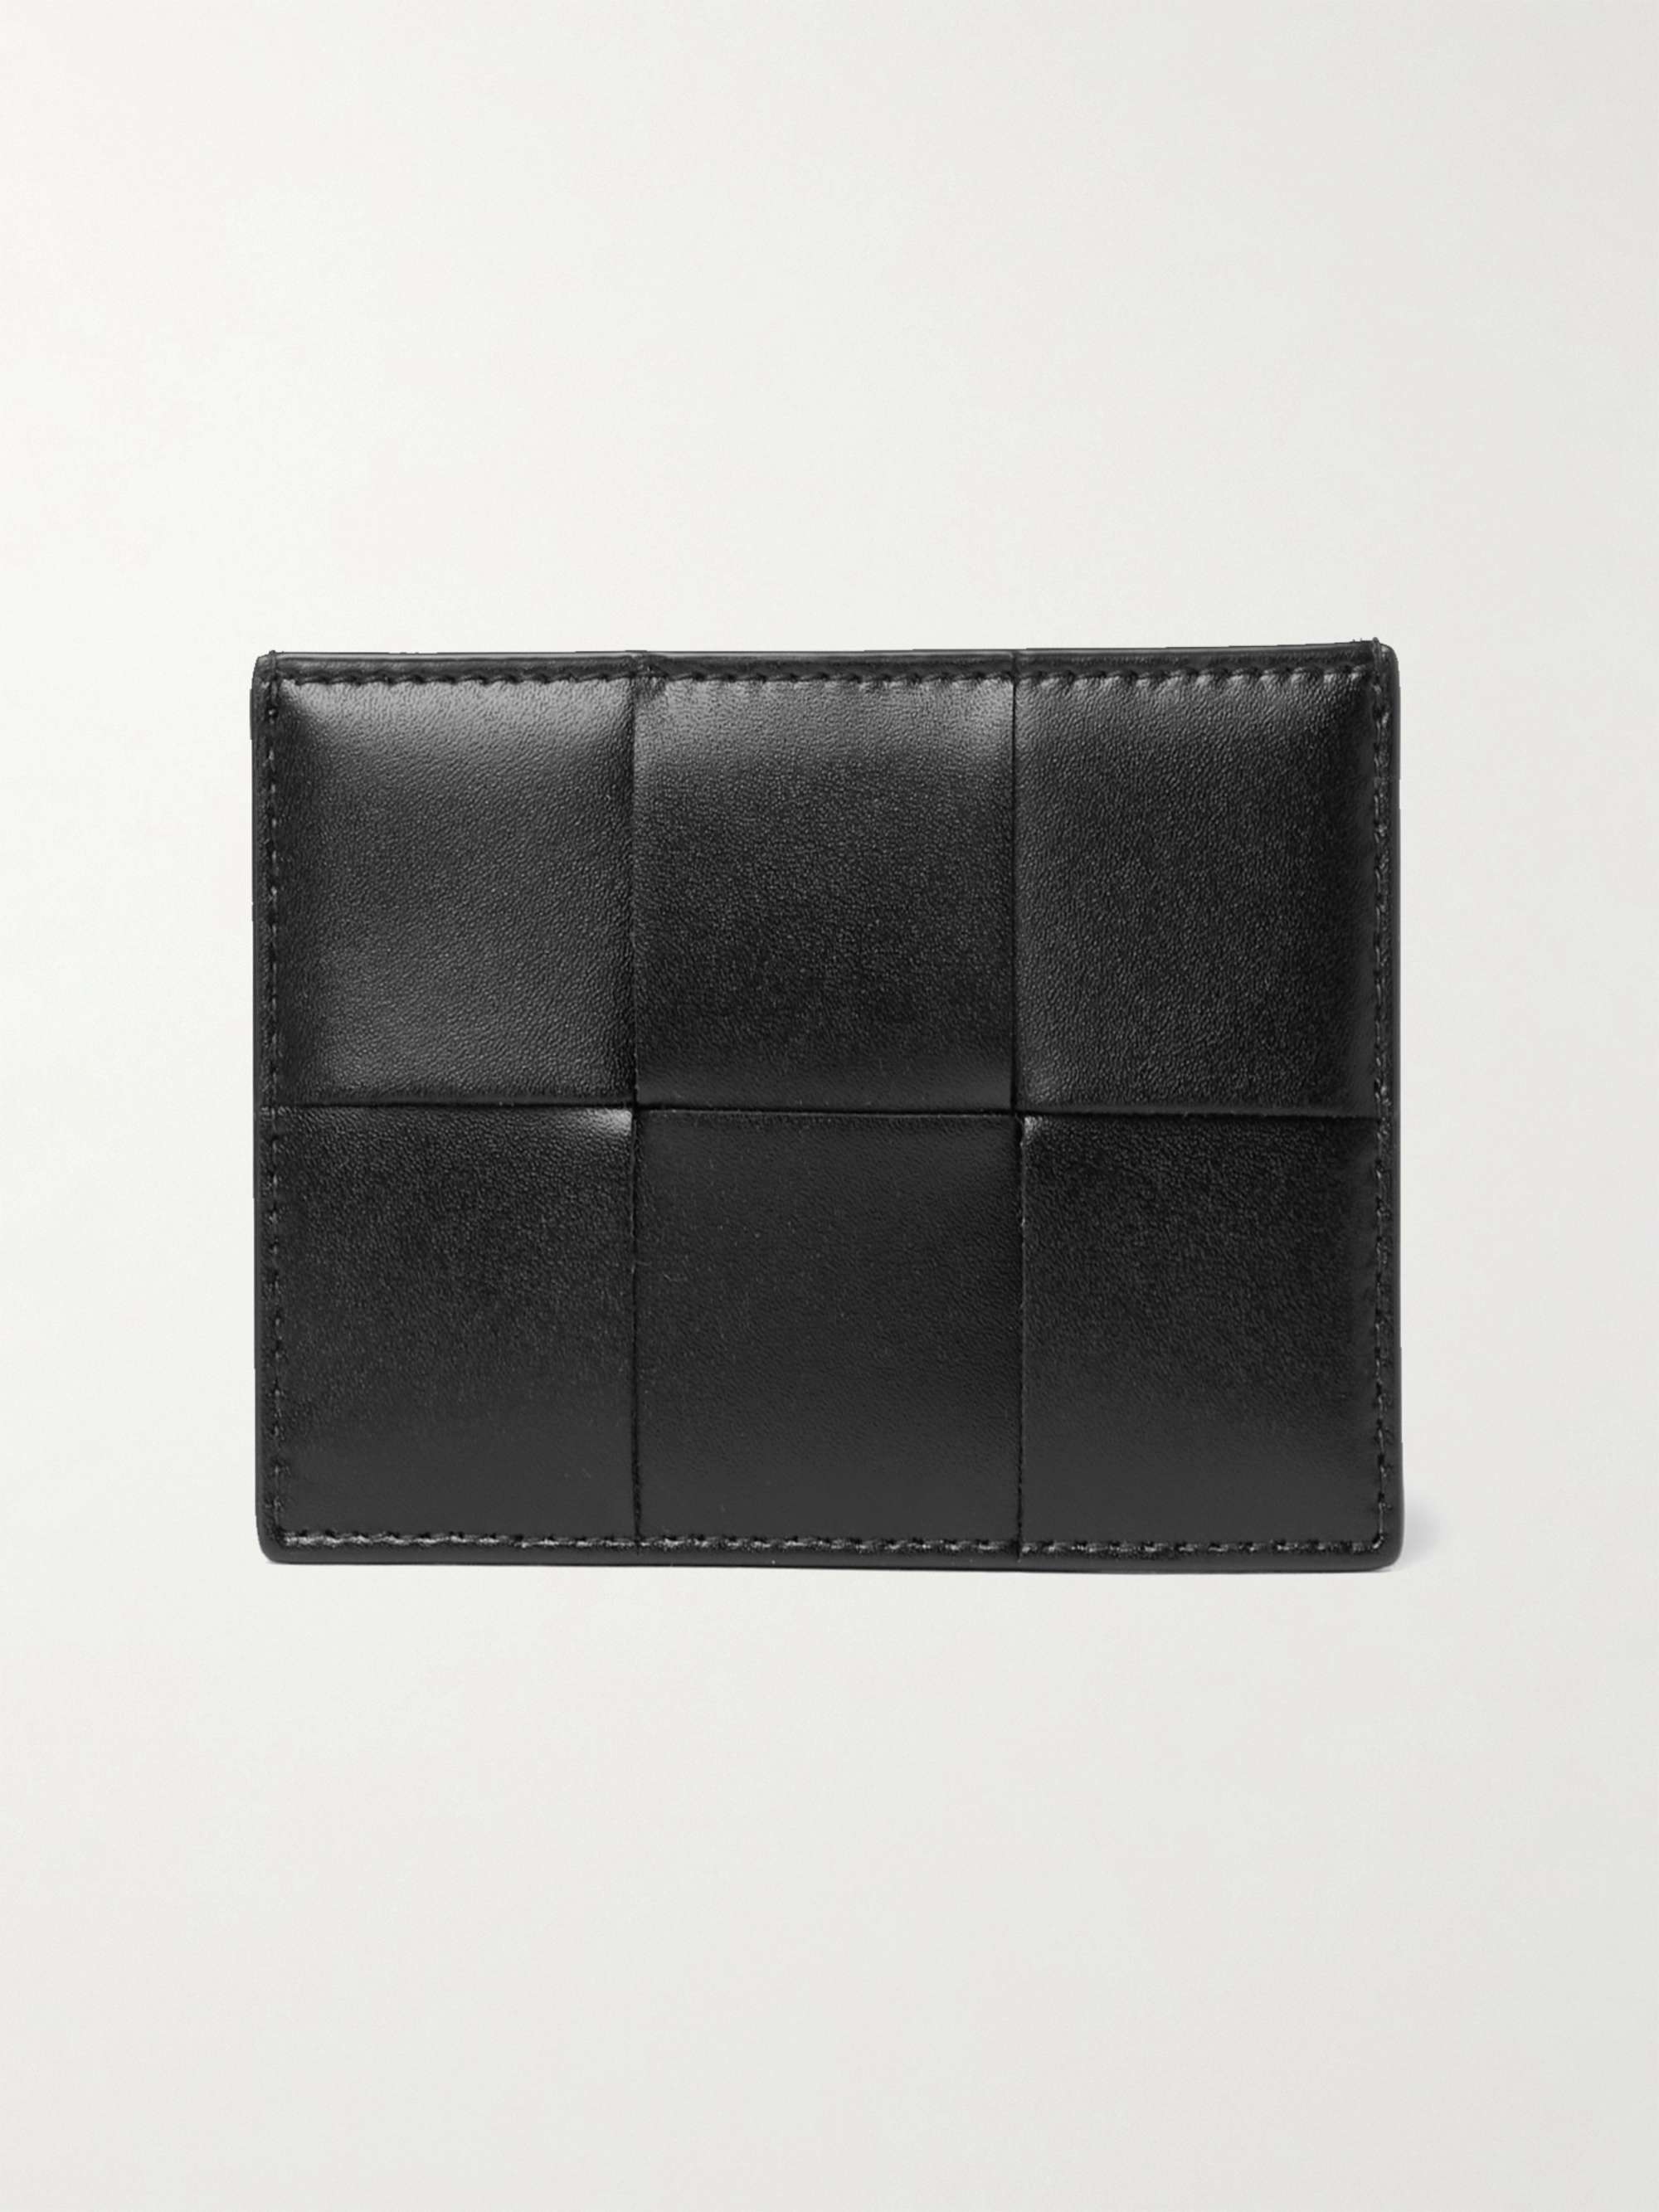 Bottega Veneta Intrecciato Leather Card Case